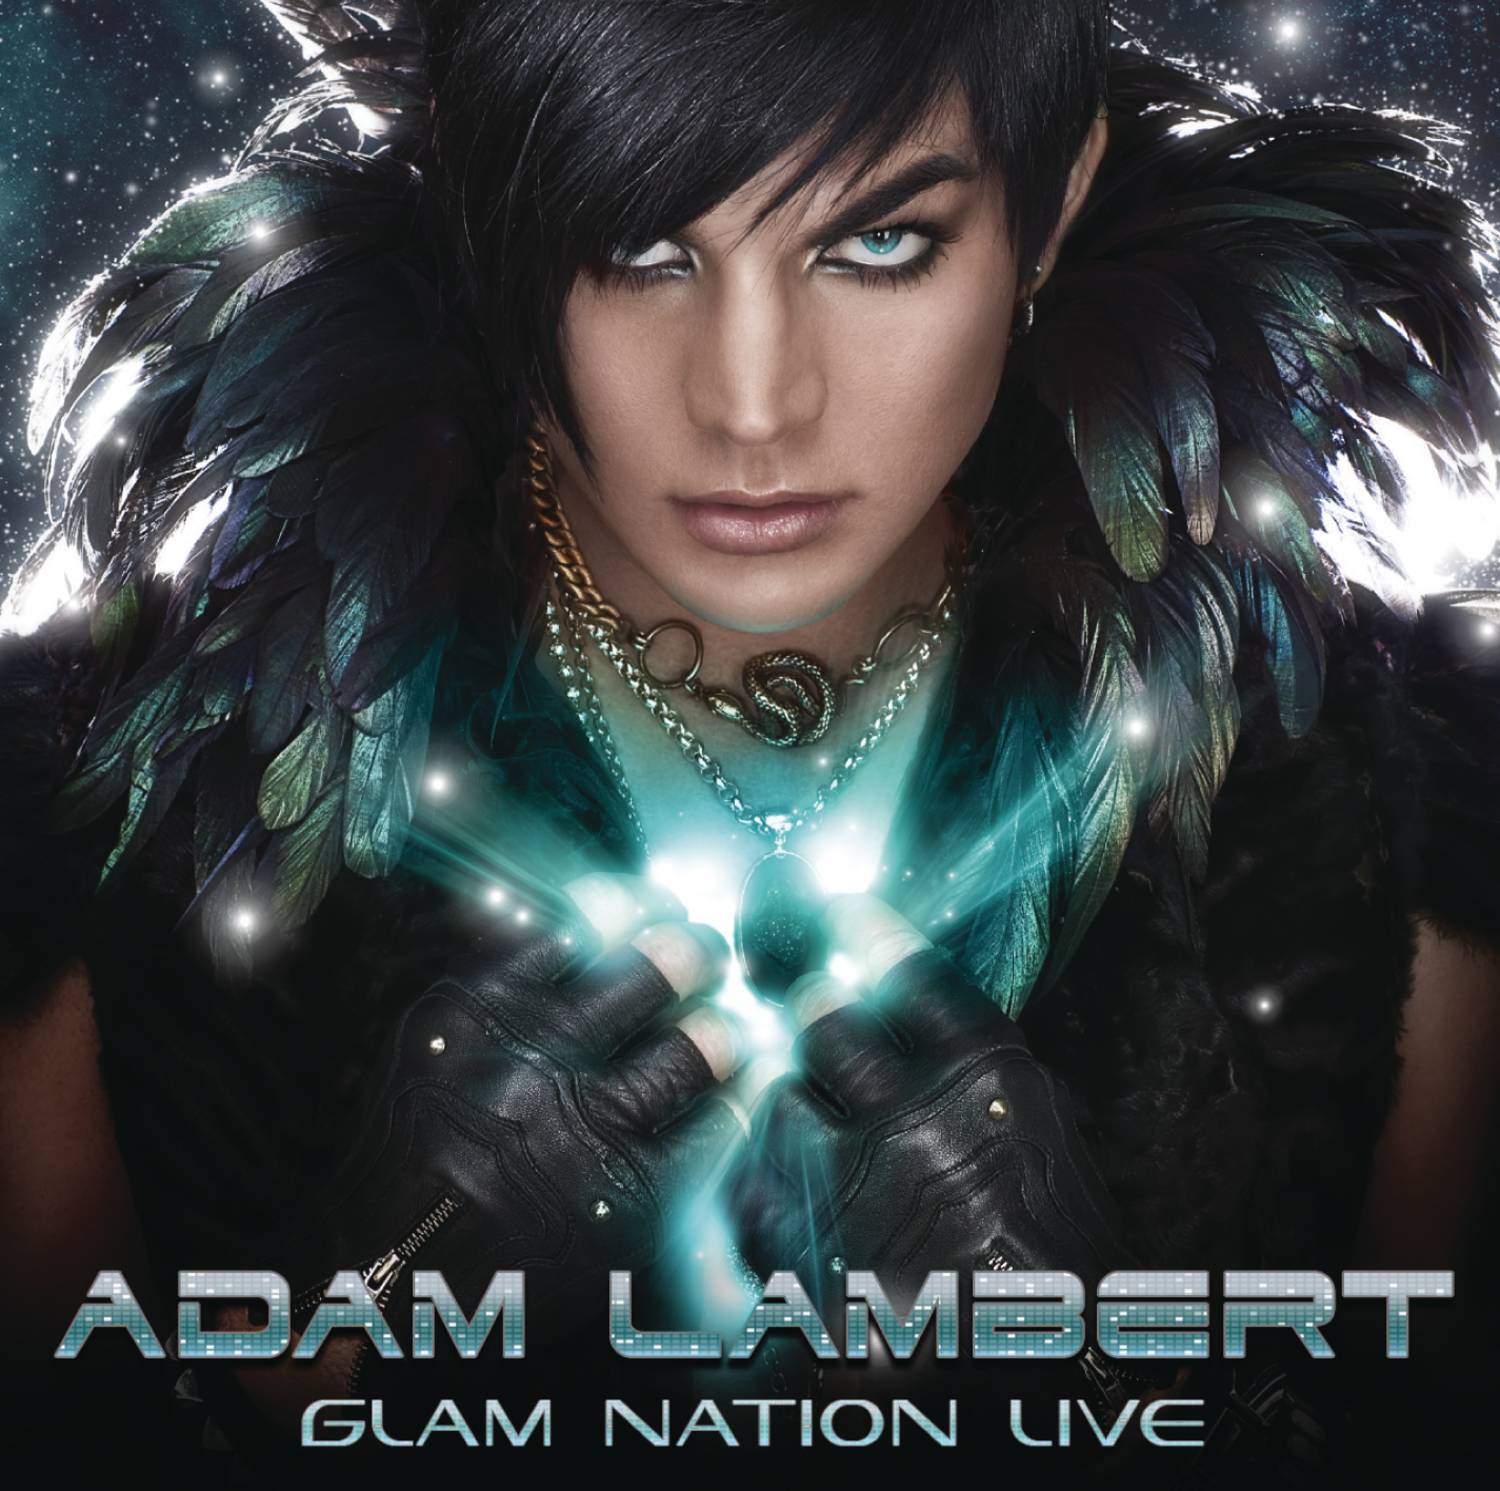 Fever - Glam Nation Live